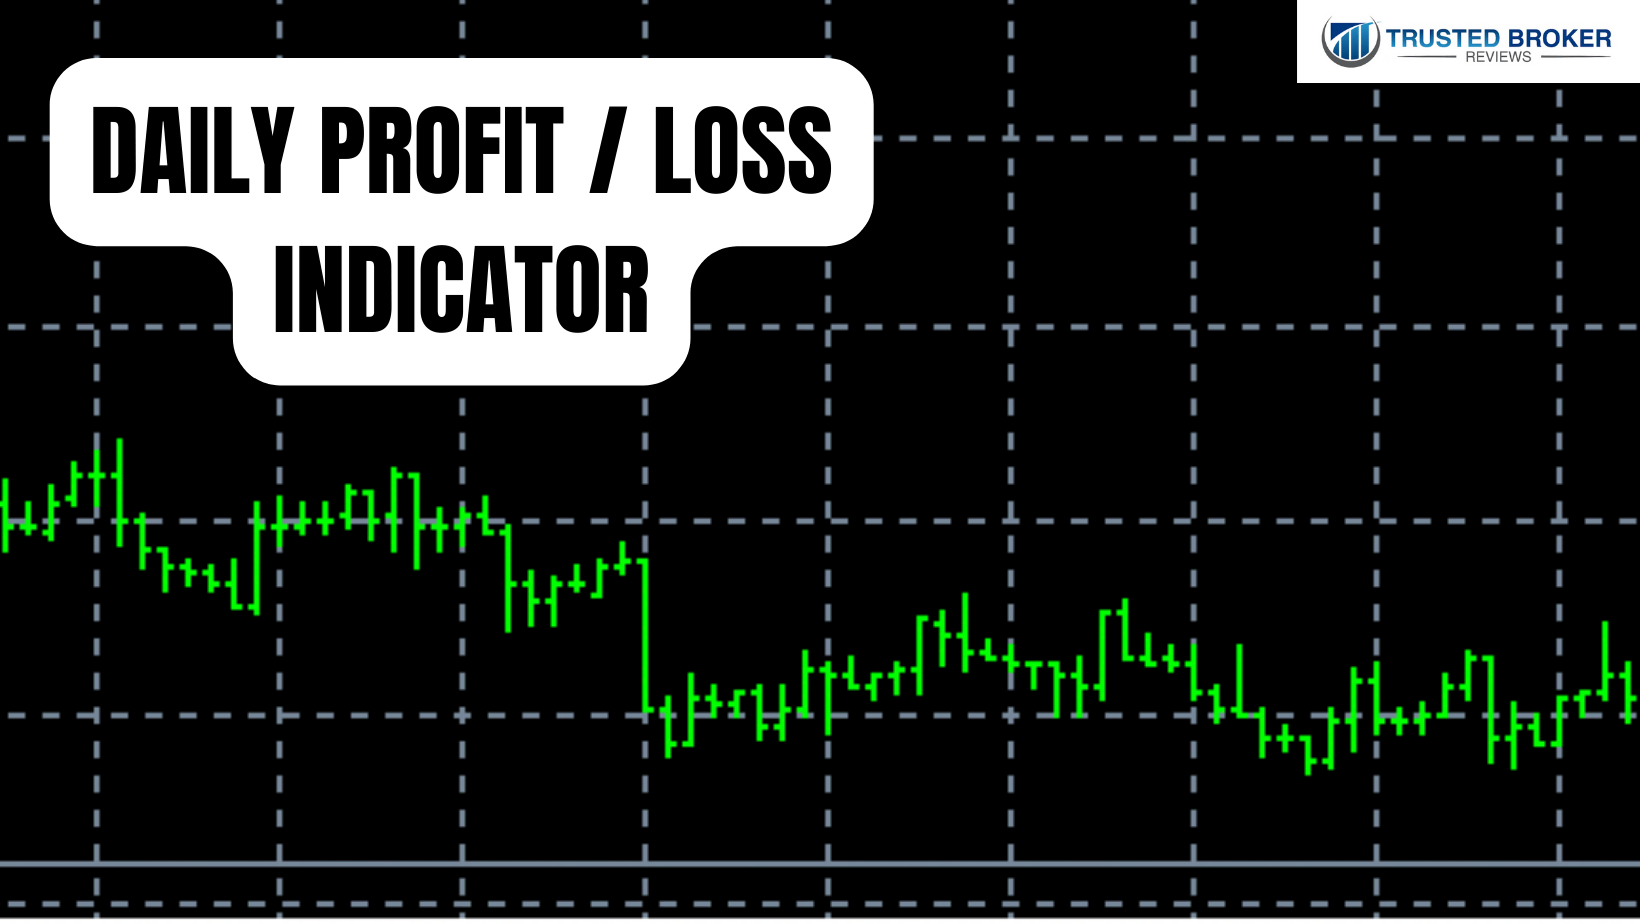 The daily profit loss indicator on MetaTrader 4